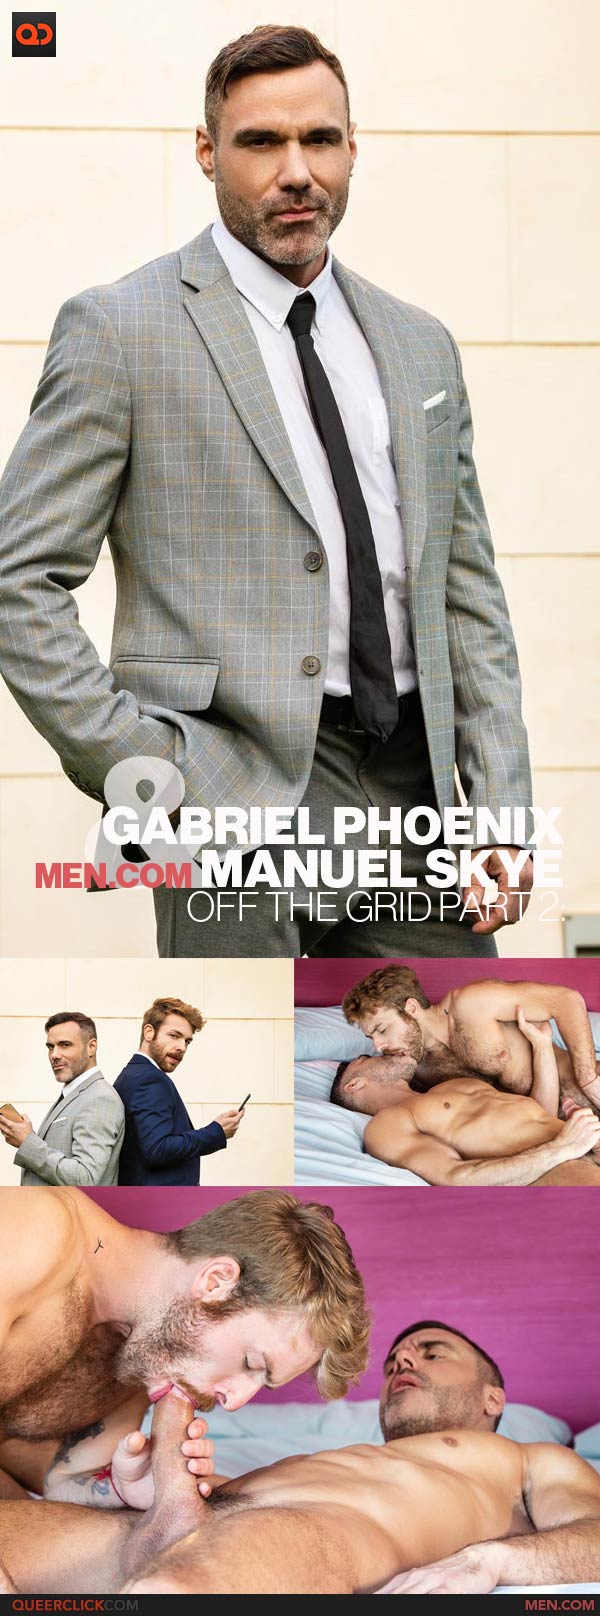 Men.com: Manuel Skye and Gabriel Phoenix